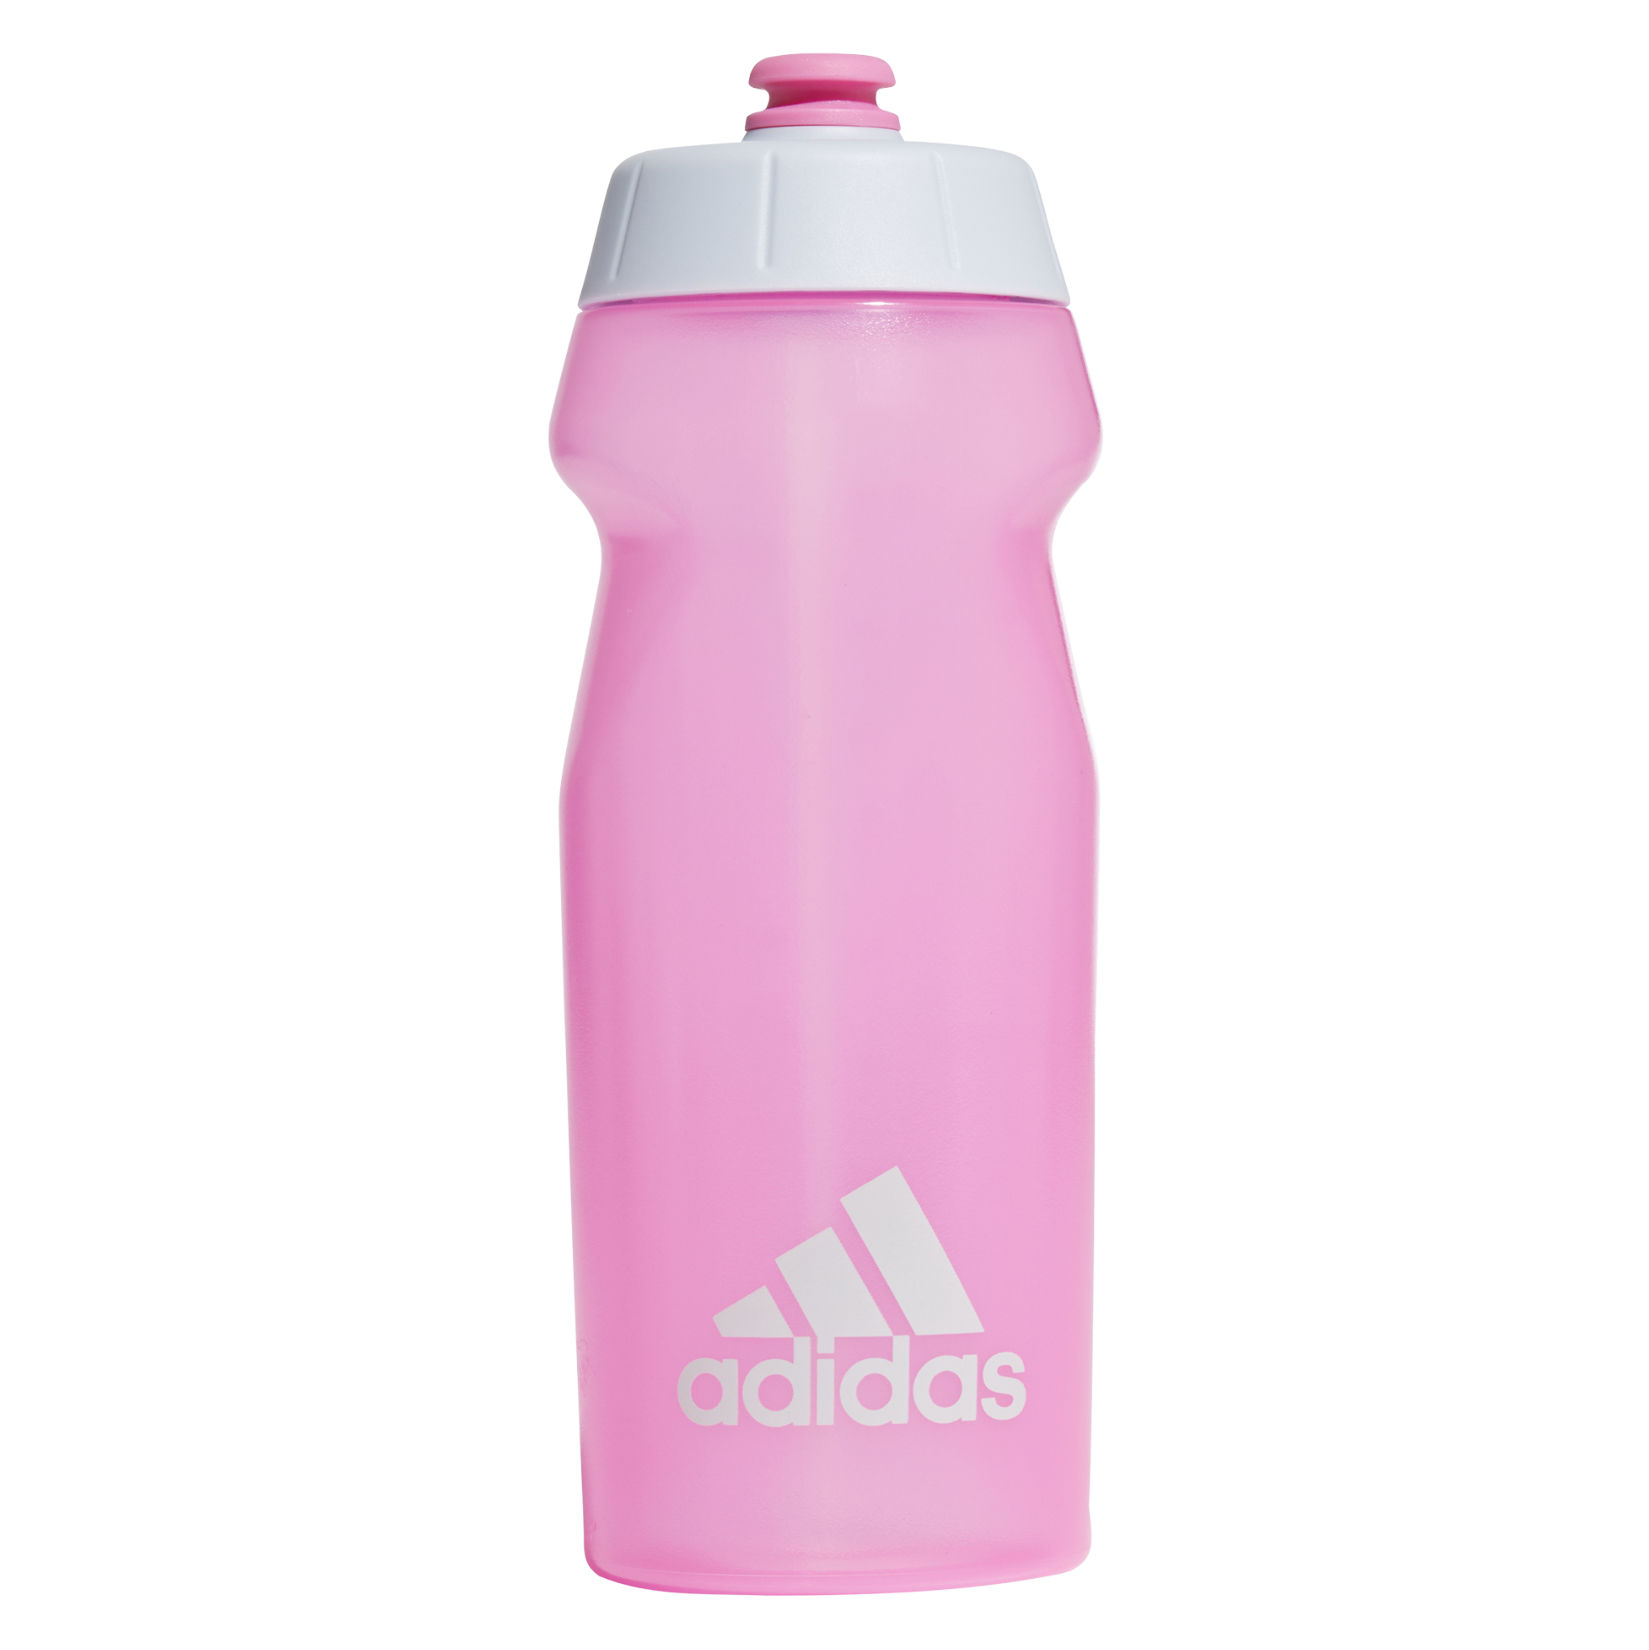 Adidas Performance Bottle 500ml Screaming Pink-Halo Blue